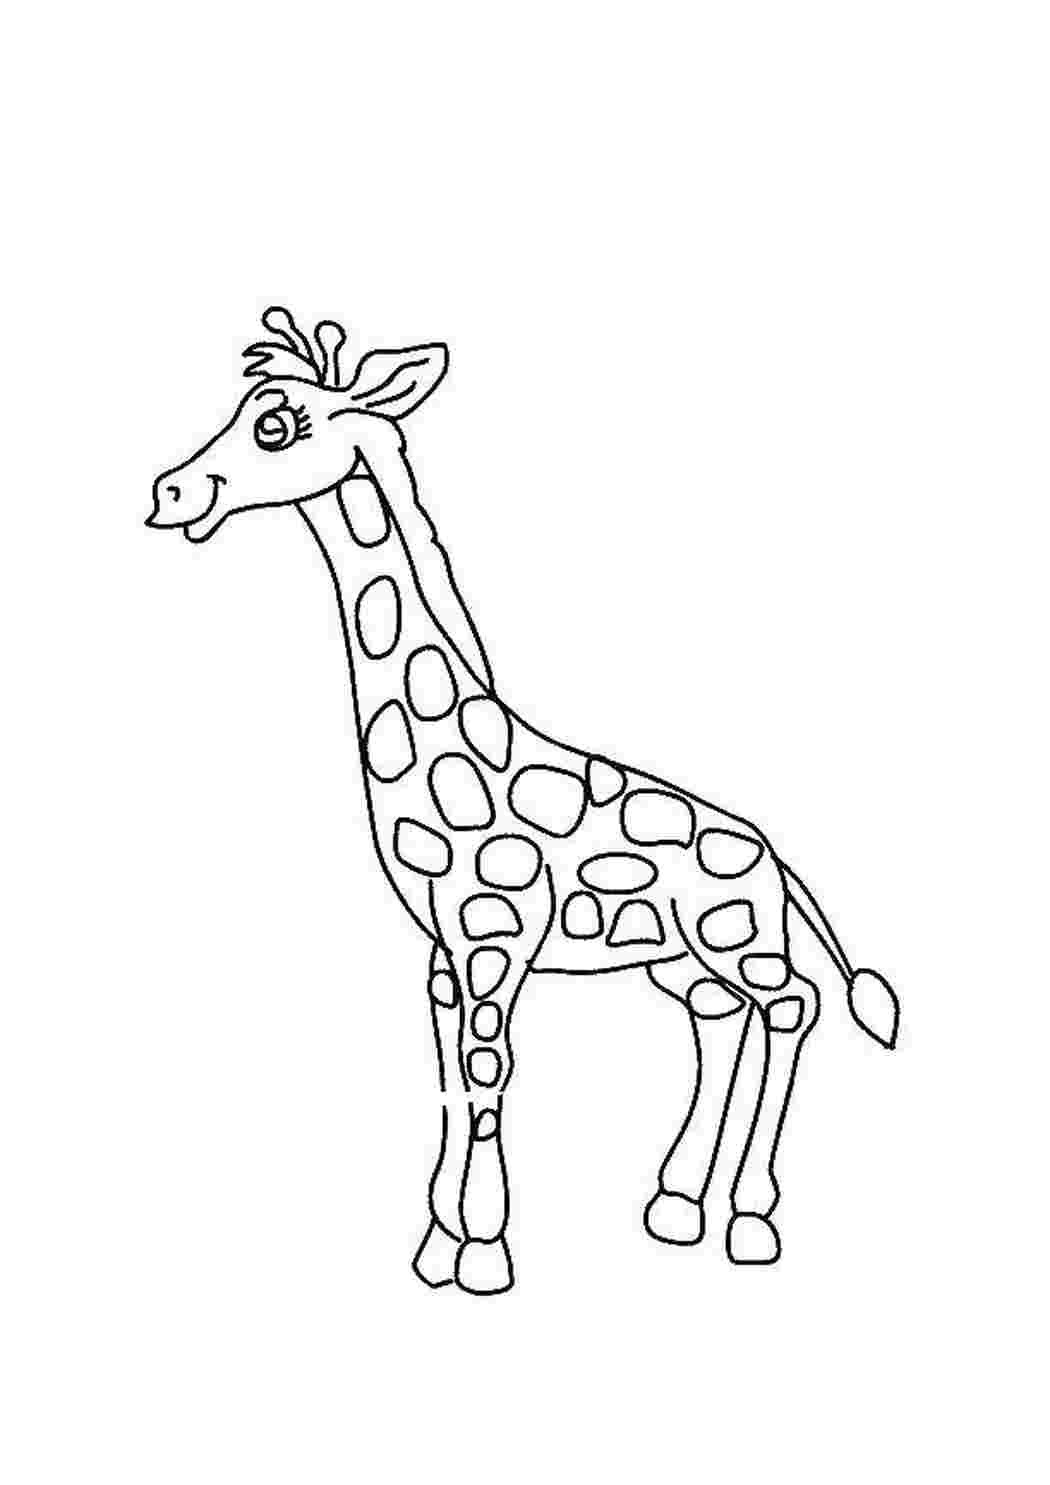 Трафарет жирафа для детей